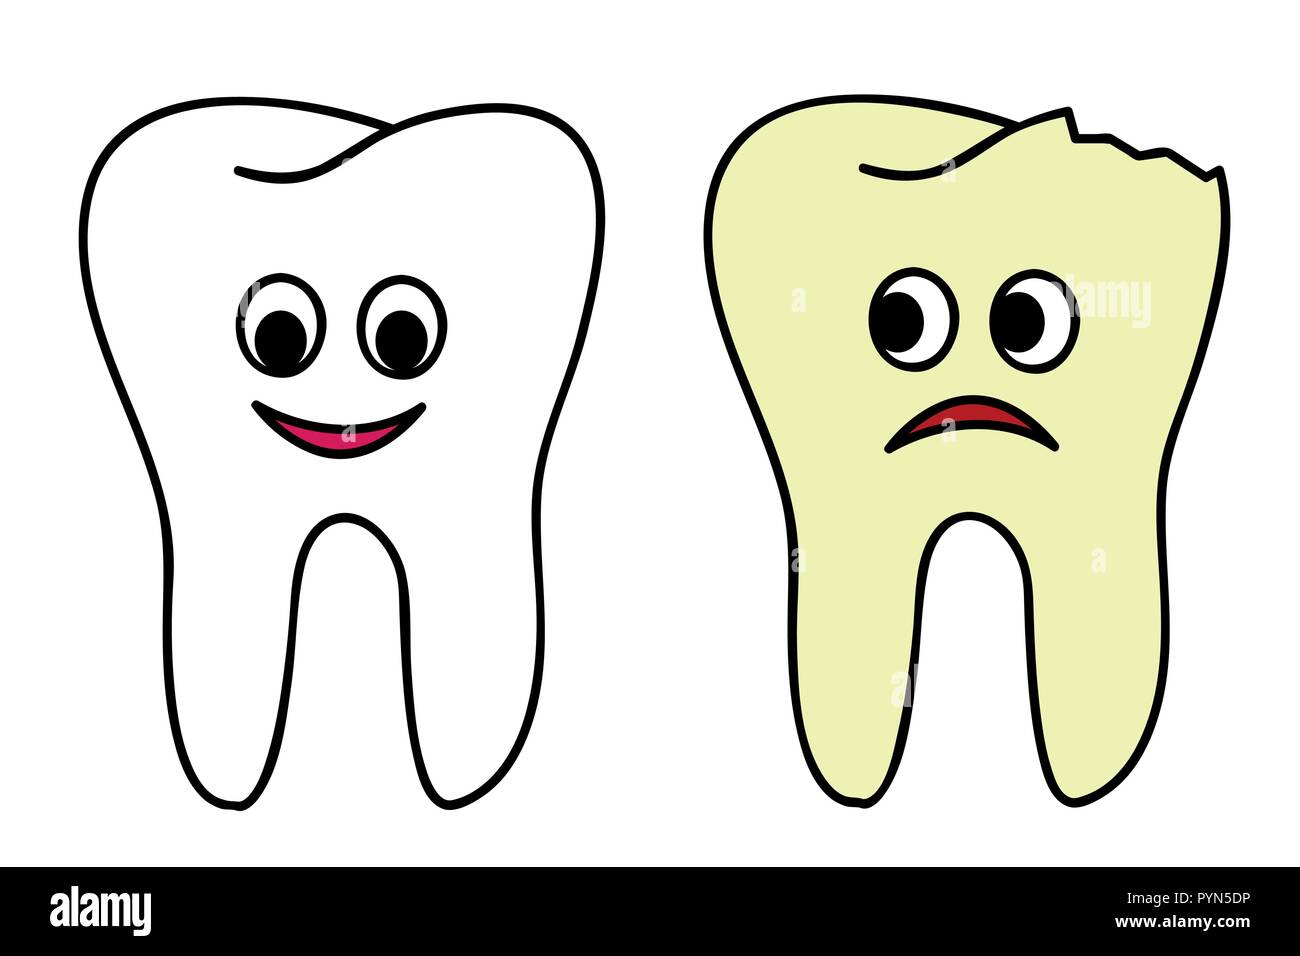 healthy and broken tooth cartoon vector illustration EPS10 Stock Vector